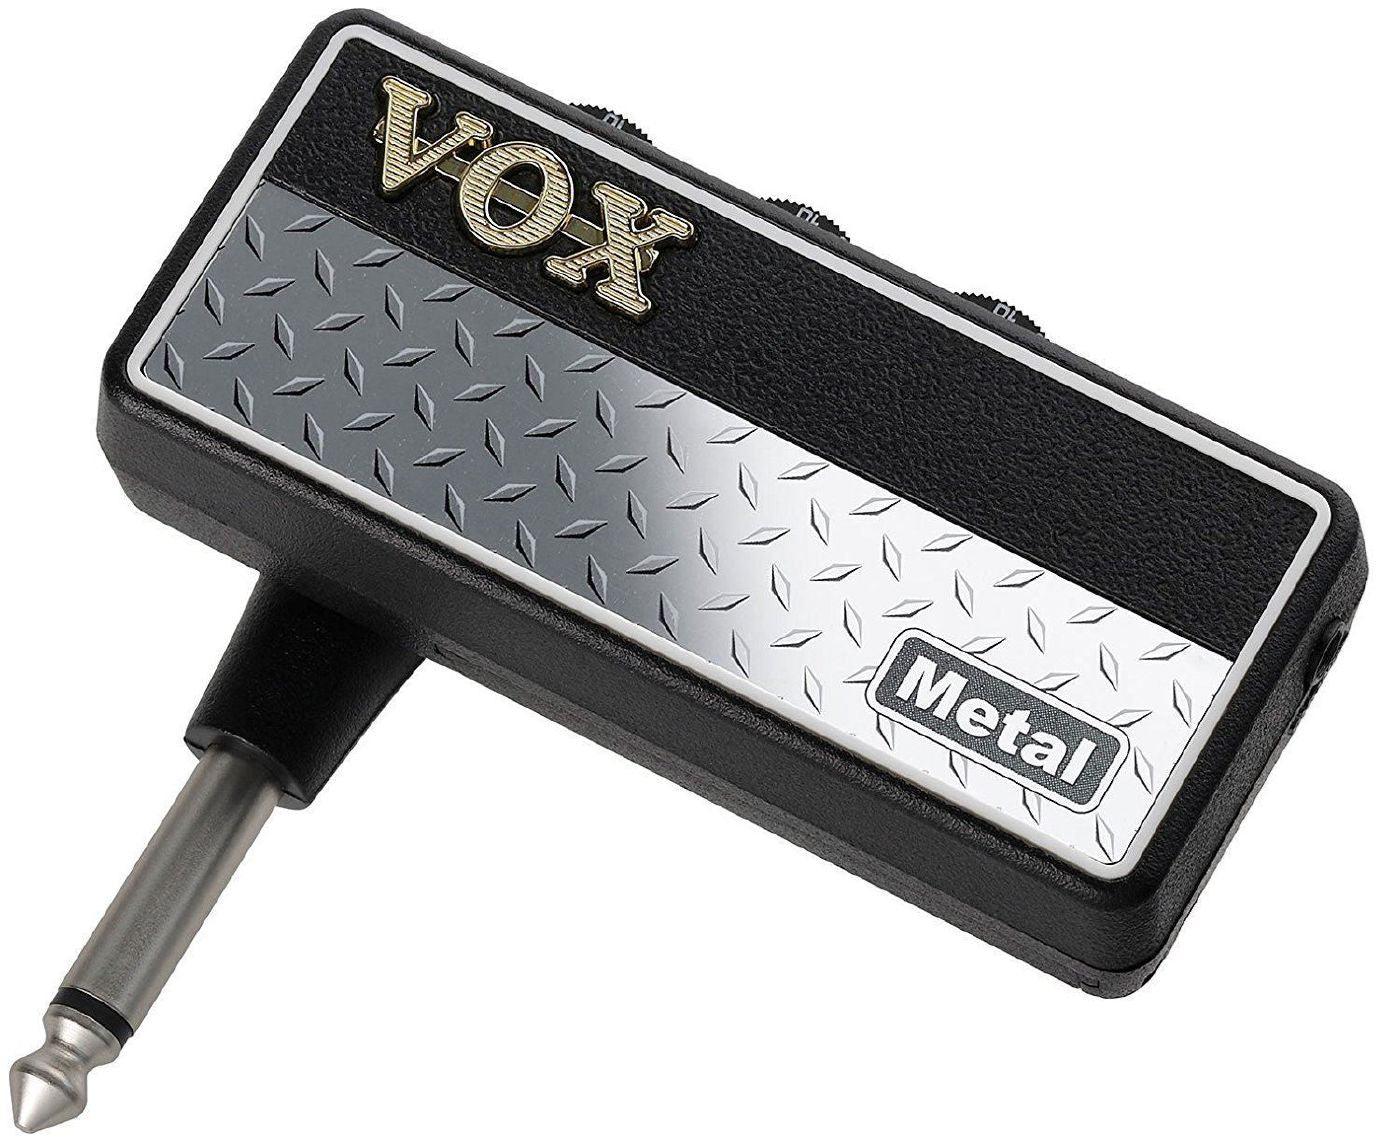 Vox AP2 Metal Headphone Amp - Guitars - Amplifiers by VOX at Muso's Stuff